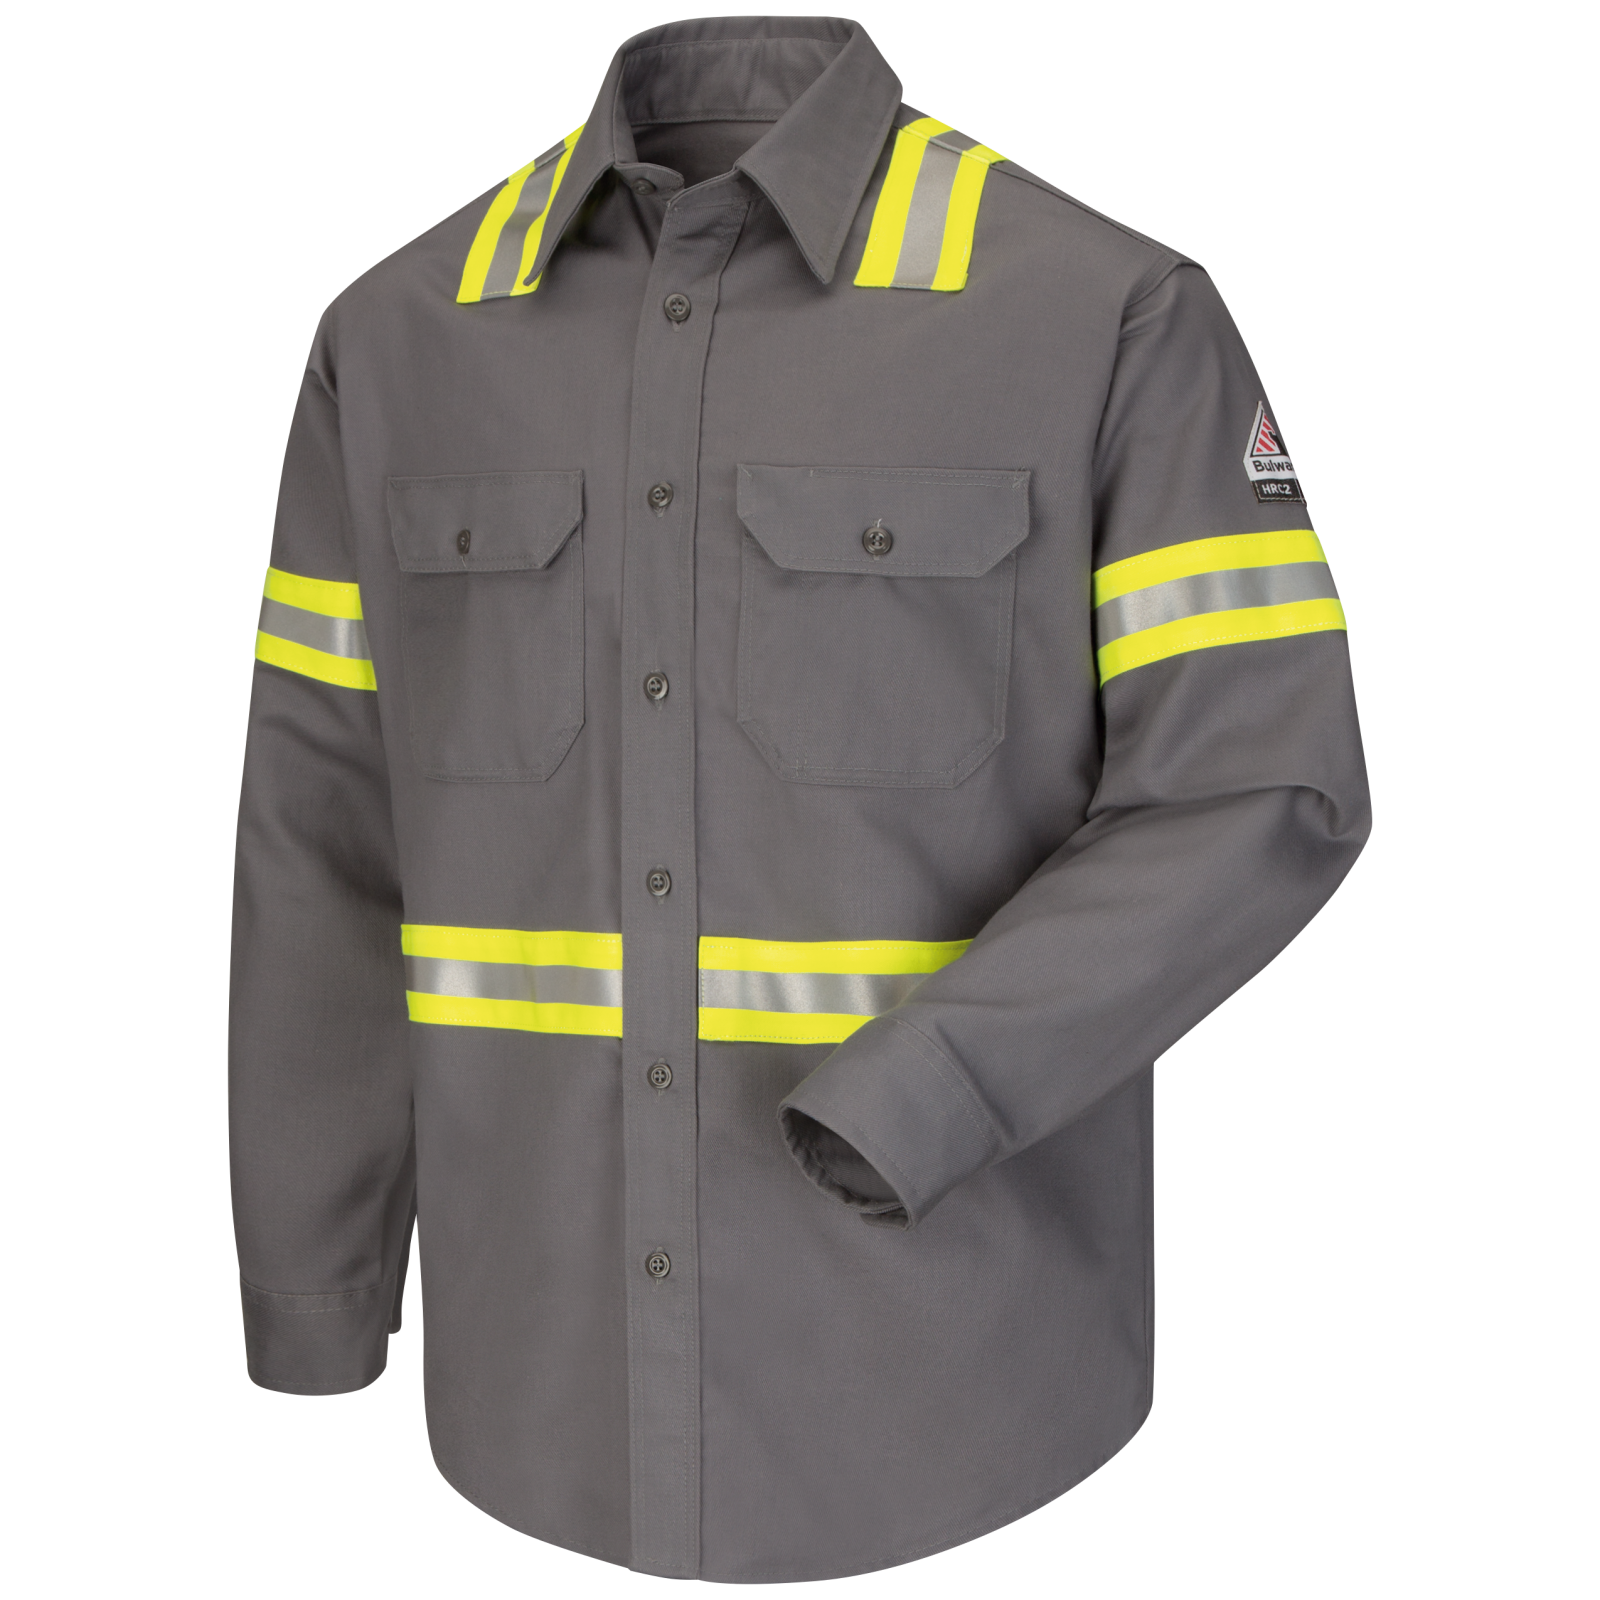 Lightweight Button Front Uniform Bulwark Flame Resistant Shirts Nomex 4.5 oz 